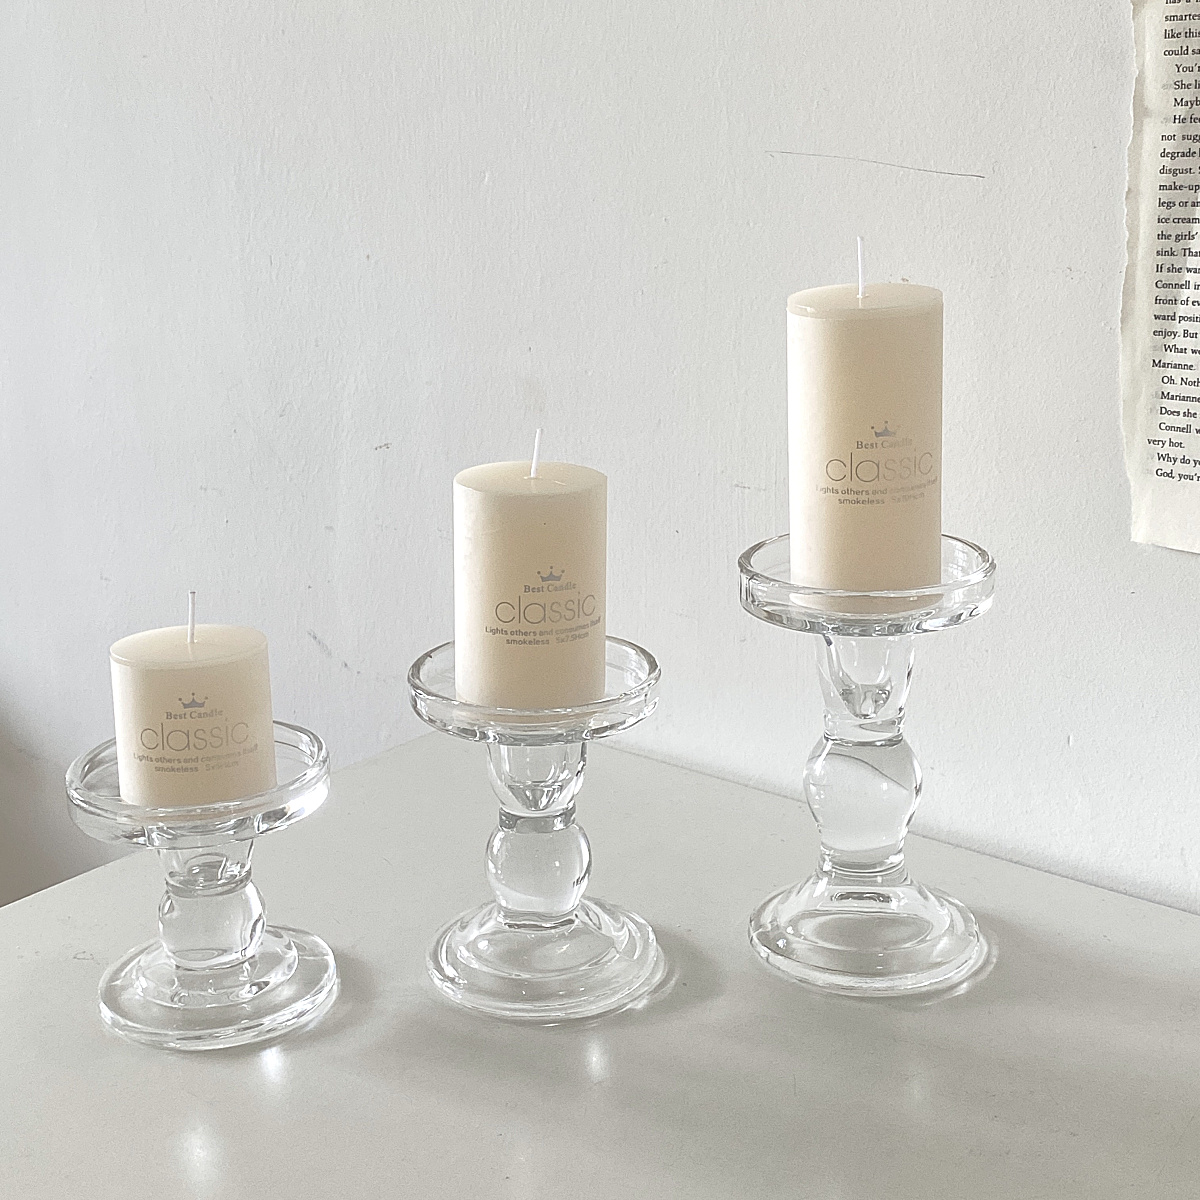 8ins简约透明玻璃烛台蜡烛北欧式现代浪漫创意罗马柱烛台家居摆件-图0